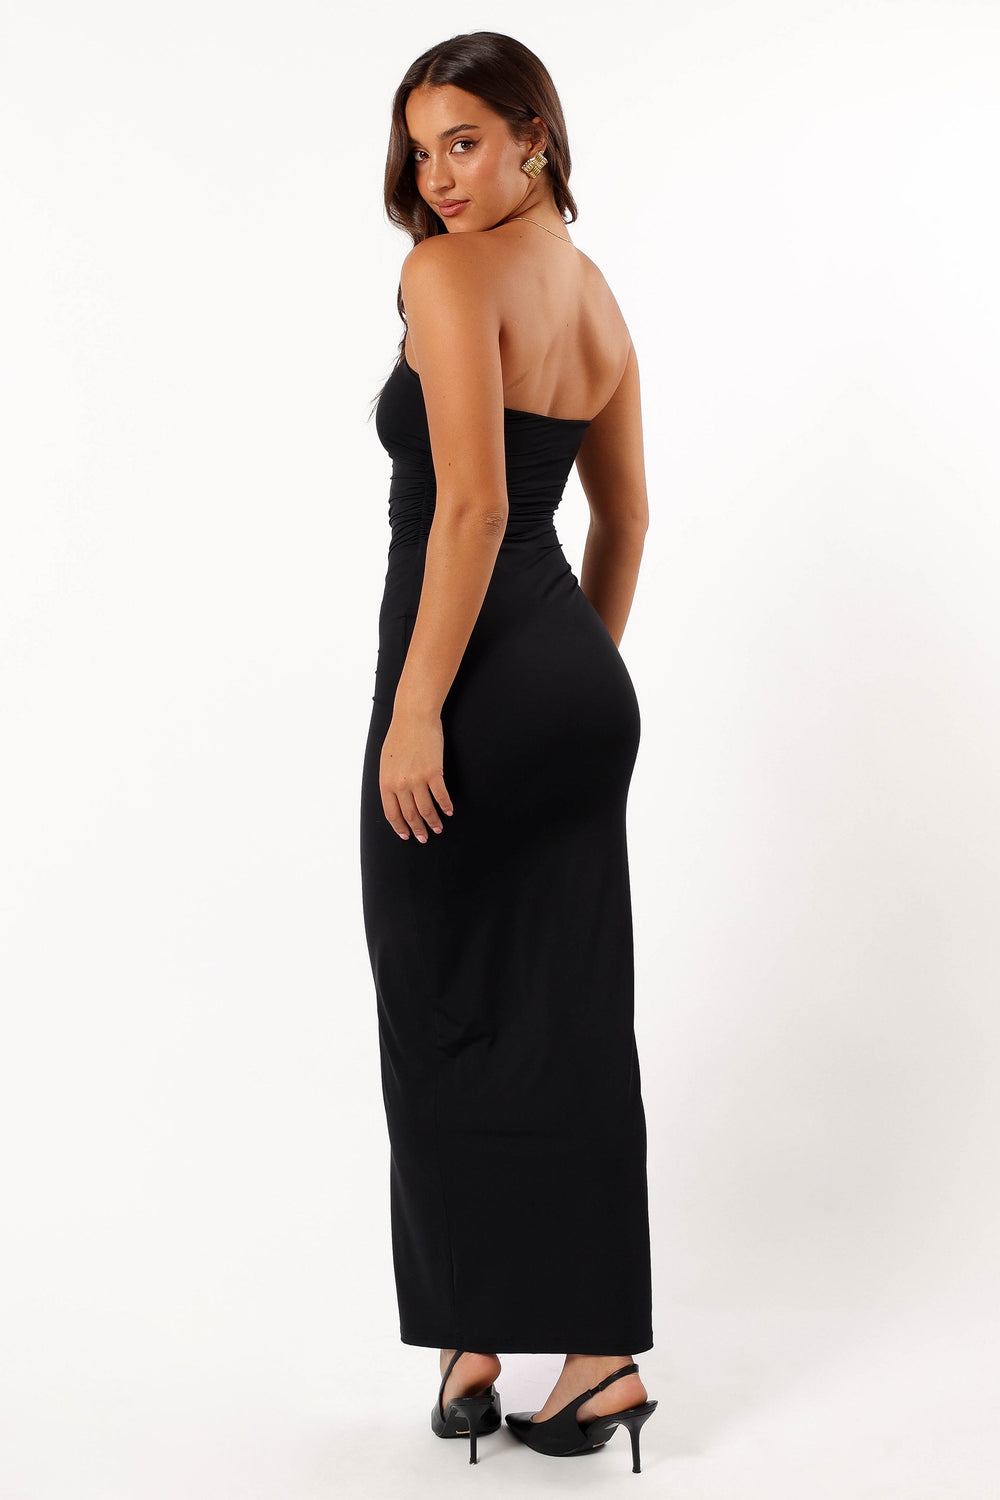 DRESSES @Brixley Strapless Maxi Dress - Black